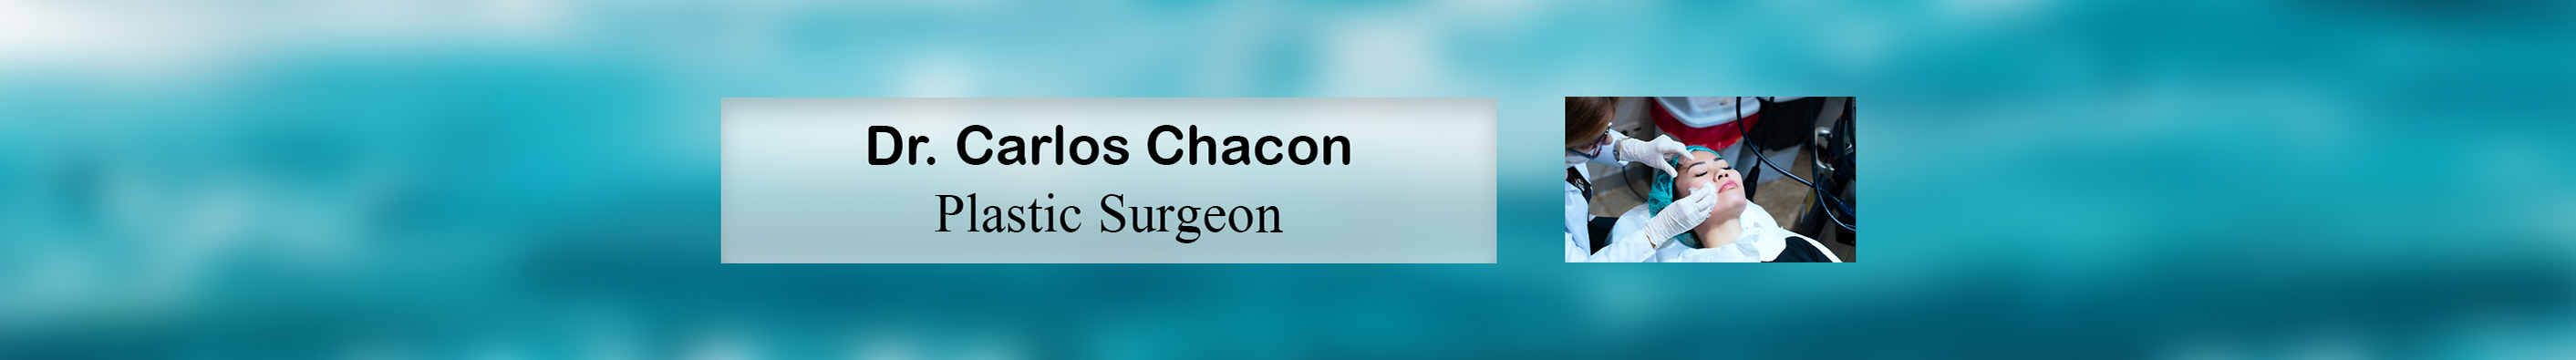 Dr Carlos Chacon's profile banner